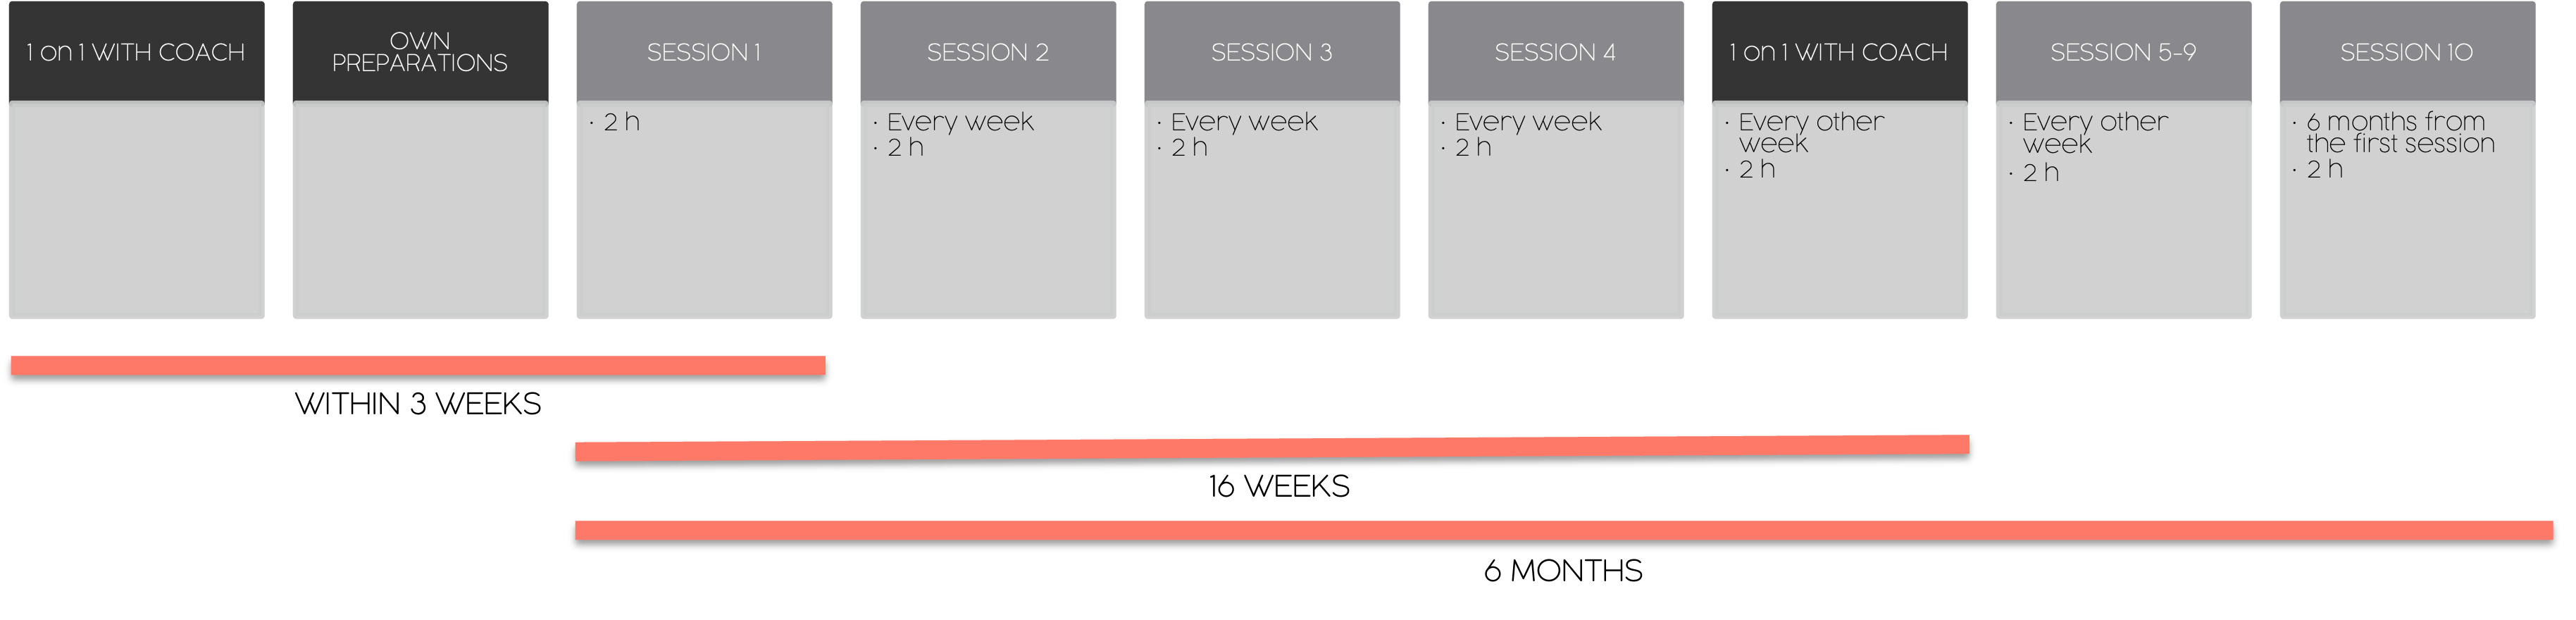 Coachingprogram Timeline